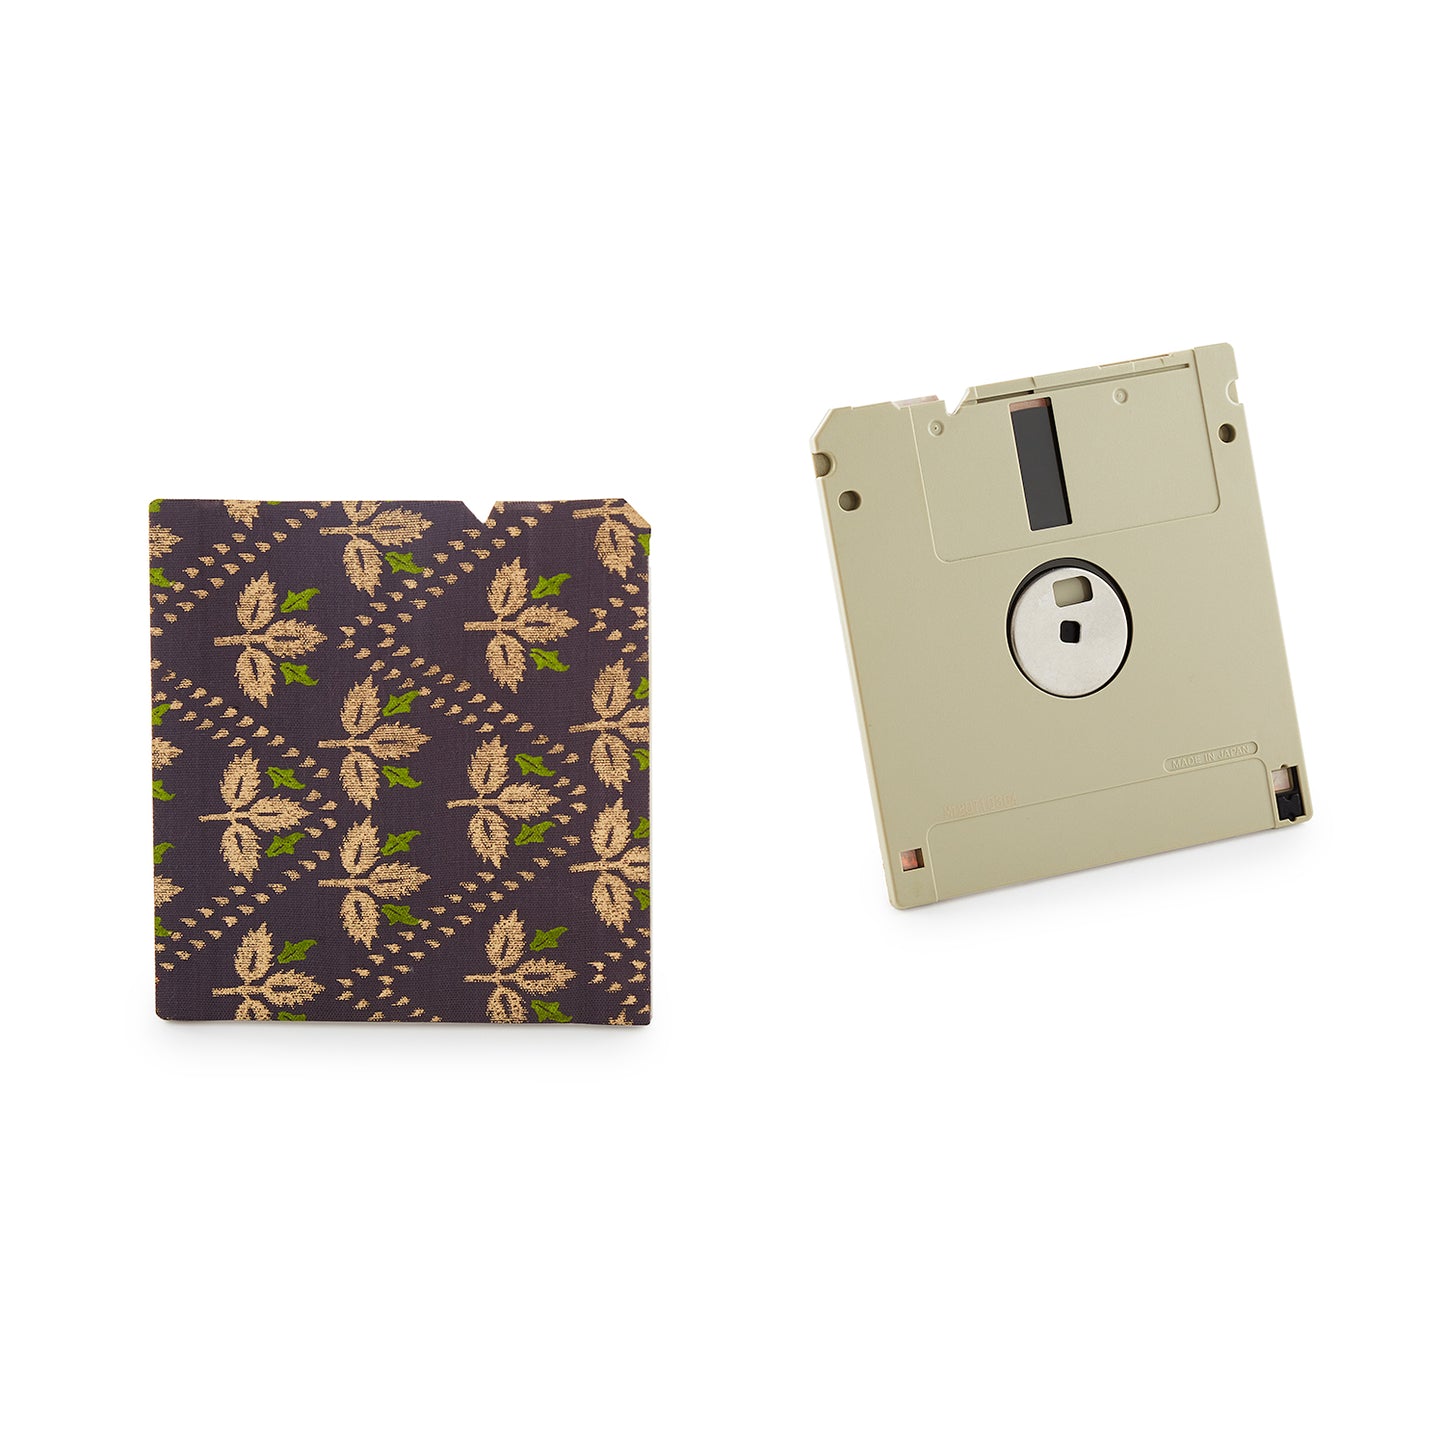 Set of 2 - Designer Fabric of Old Floppy Disks Coasters